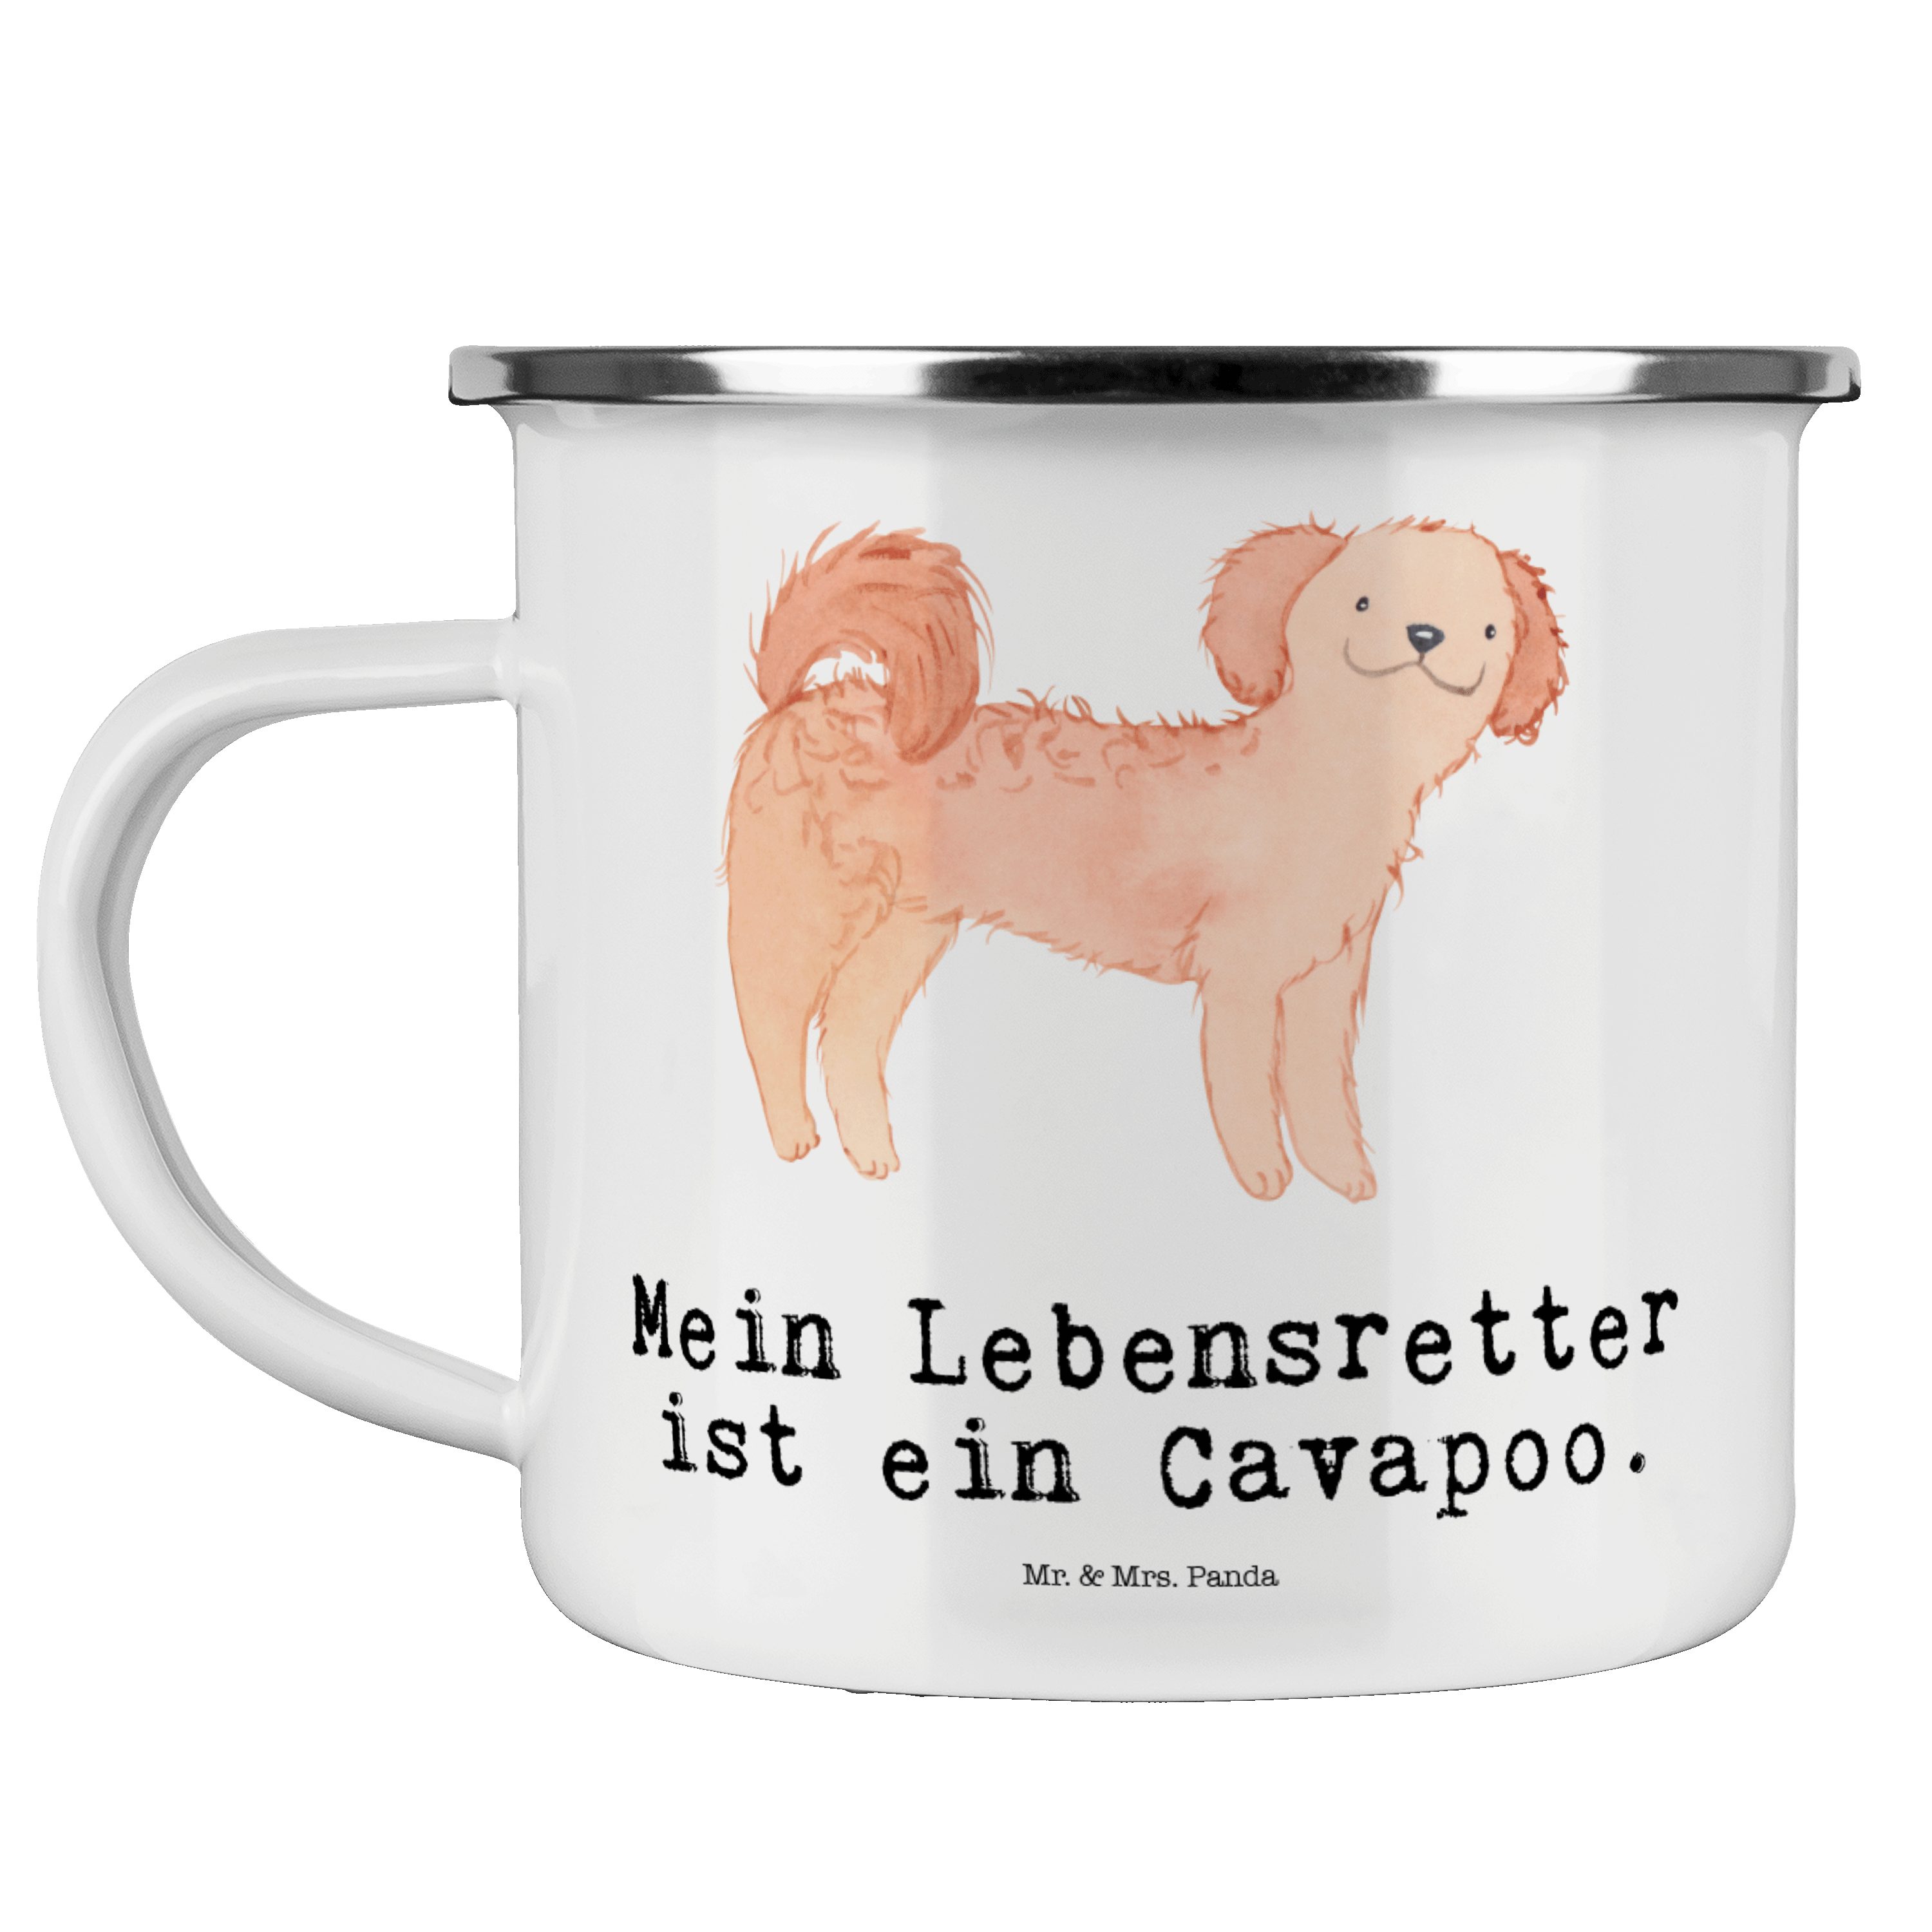 Mr. & Mrs. Panda Becher Cavapoo Lebensretter - Weiß - Geschenk, Cavoodle, Emaille Campingbech, Emaille